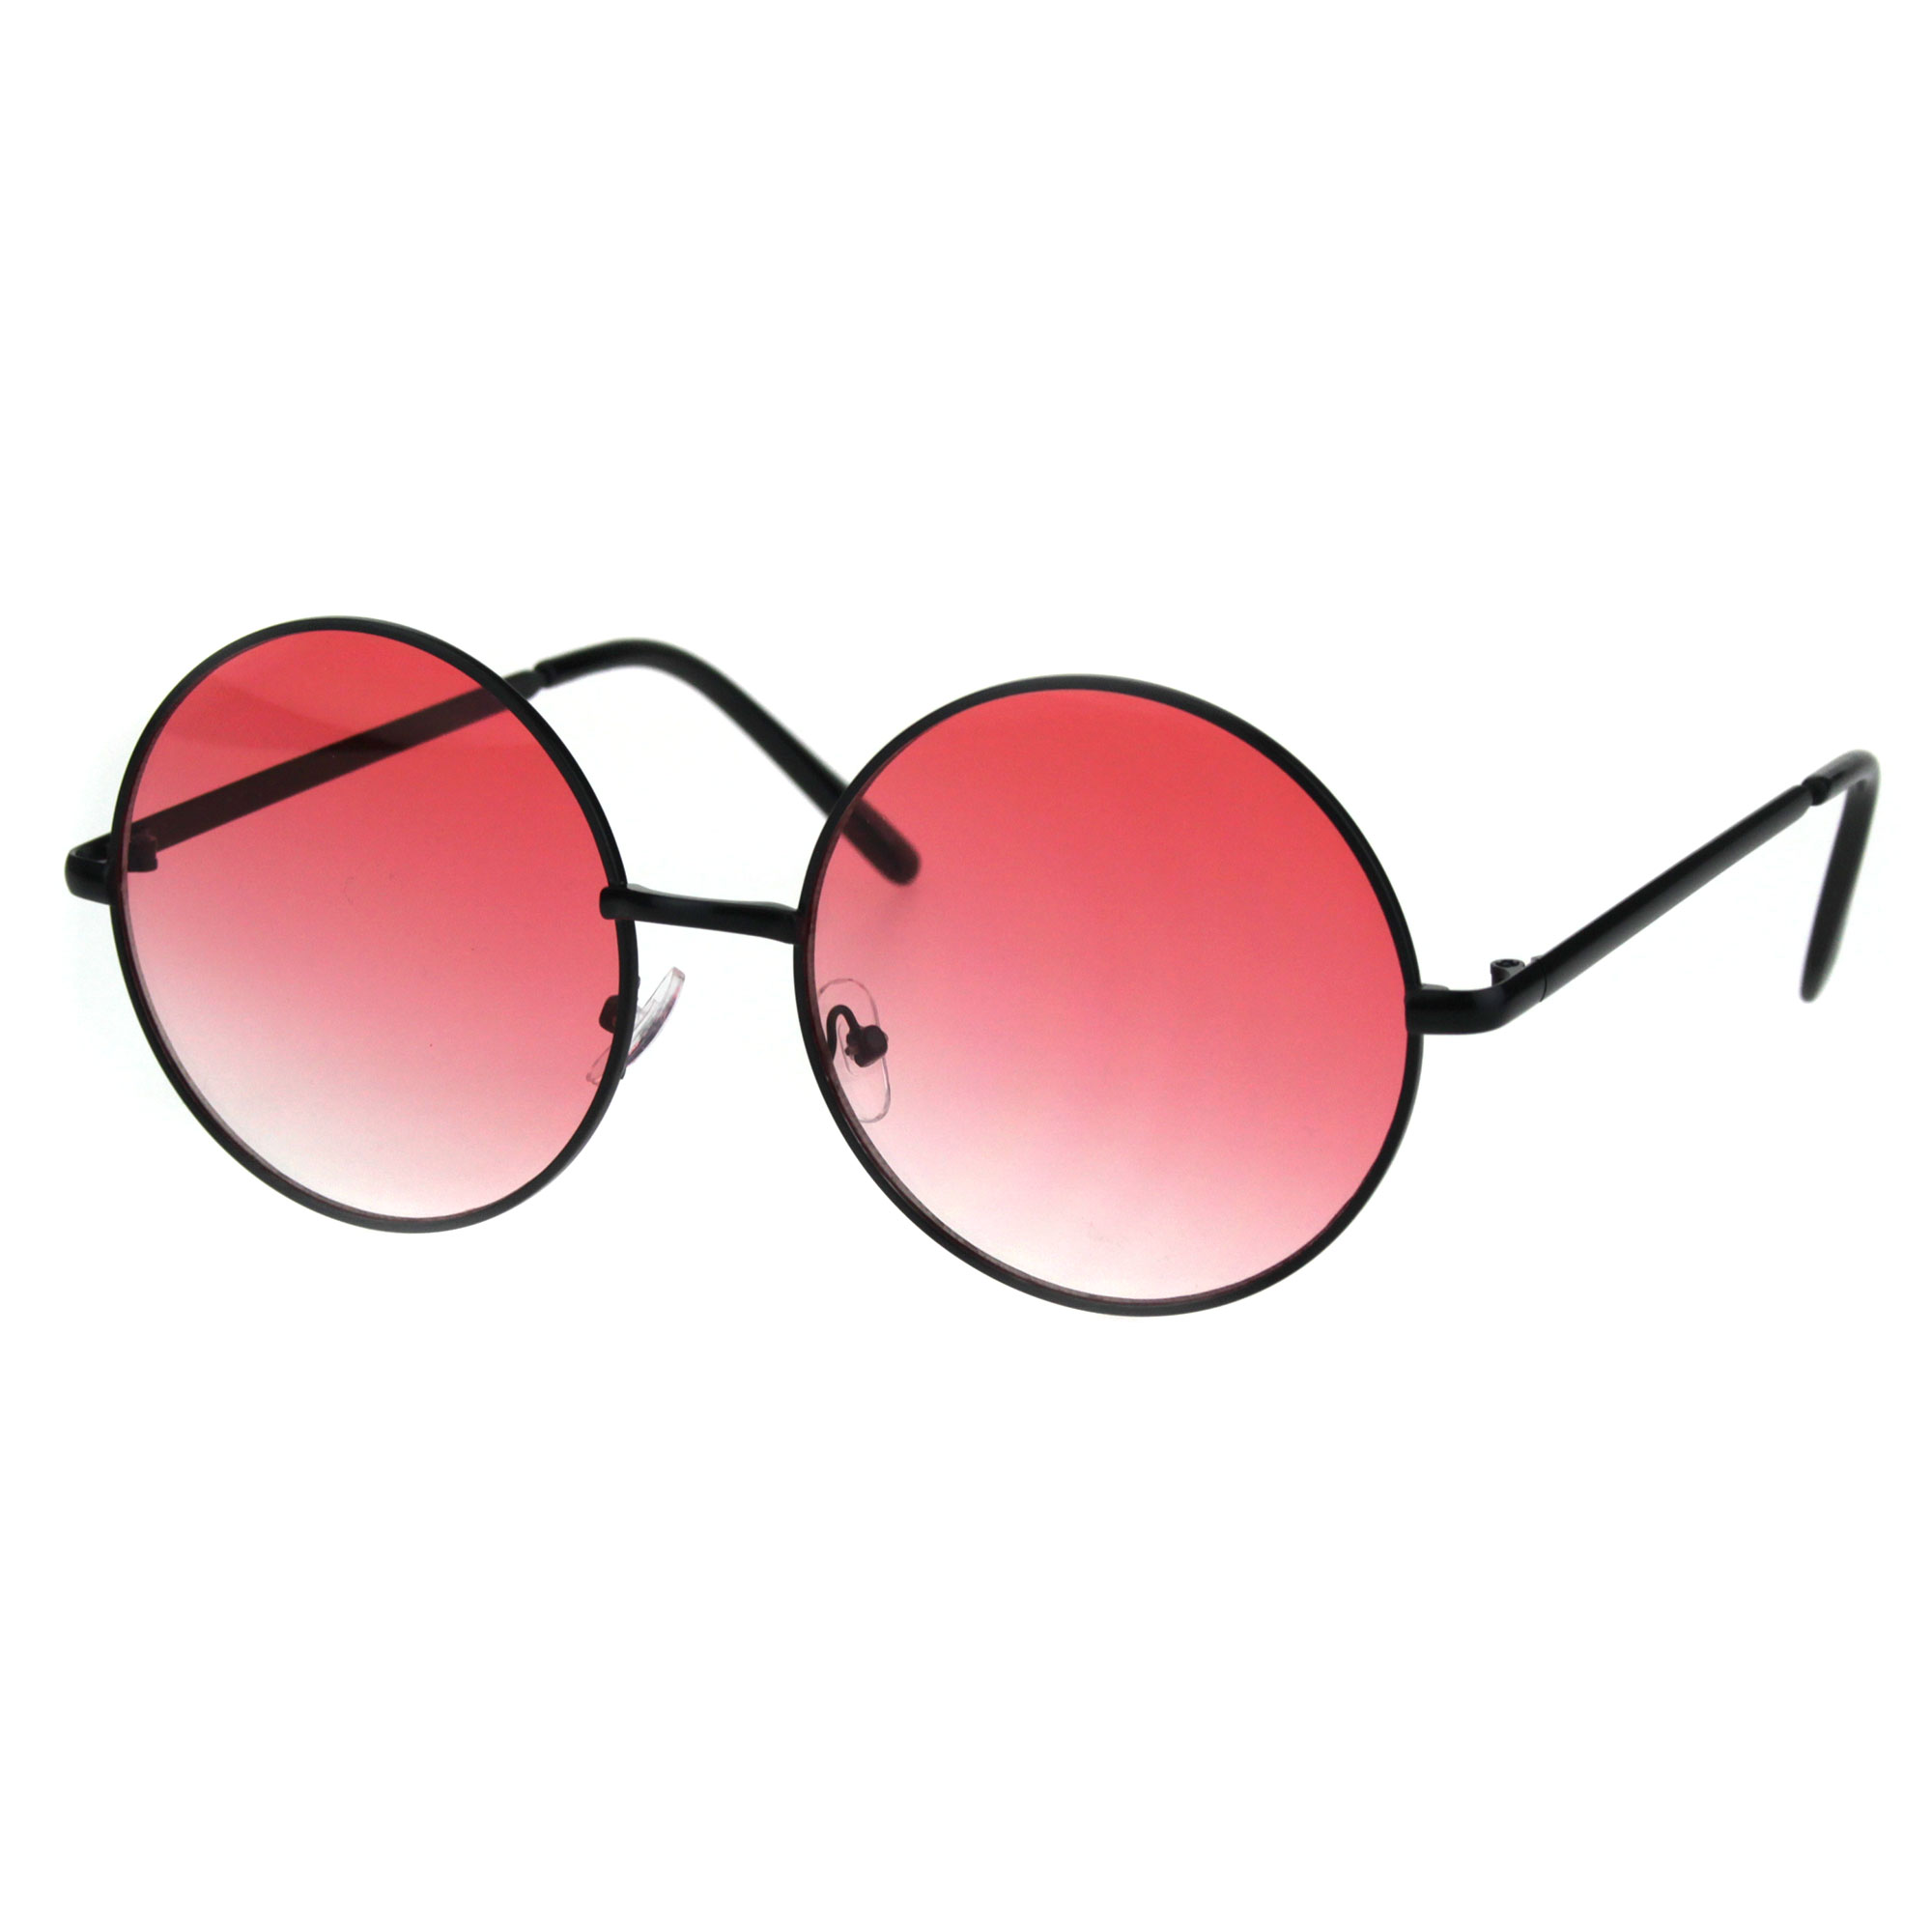 Round Circle Lens Hippie Metal Rim Gradient Sunglasses Black Red - image 2 of 4